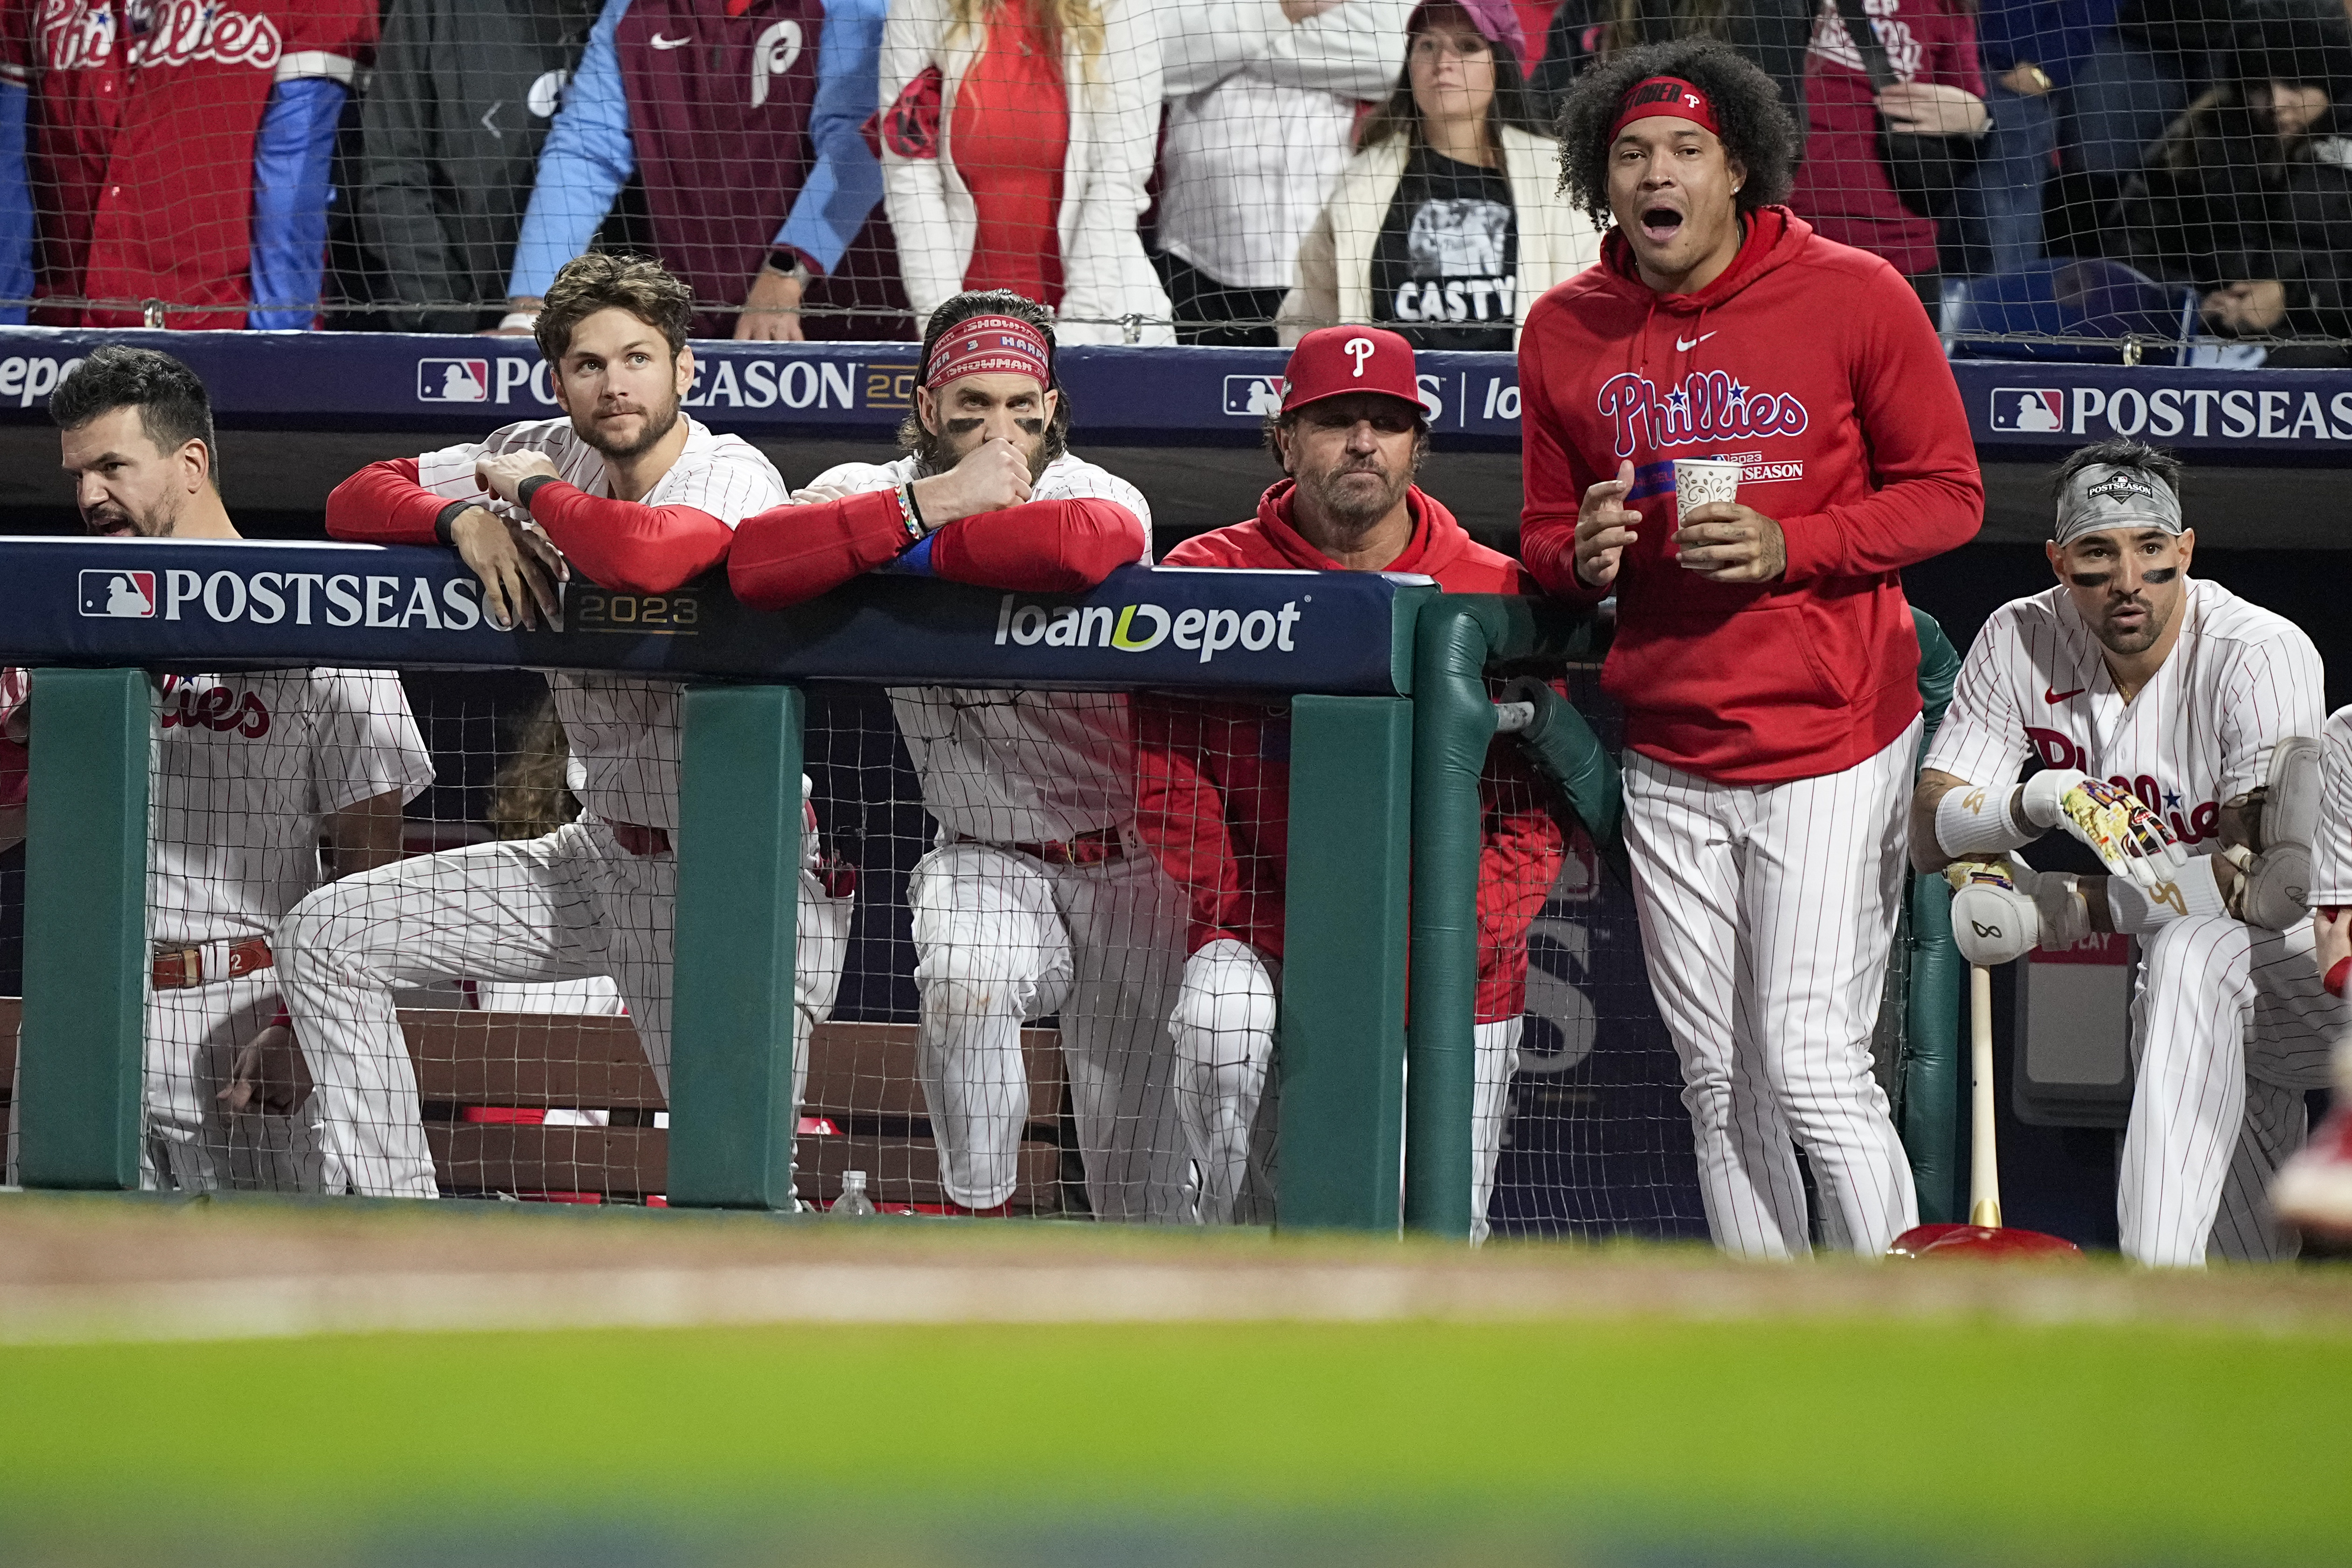 WATCH: Bryce Harper Home Run Sends Phillies to First World Series